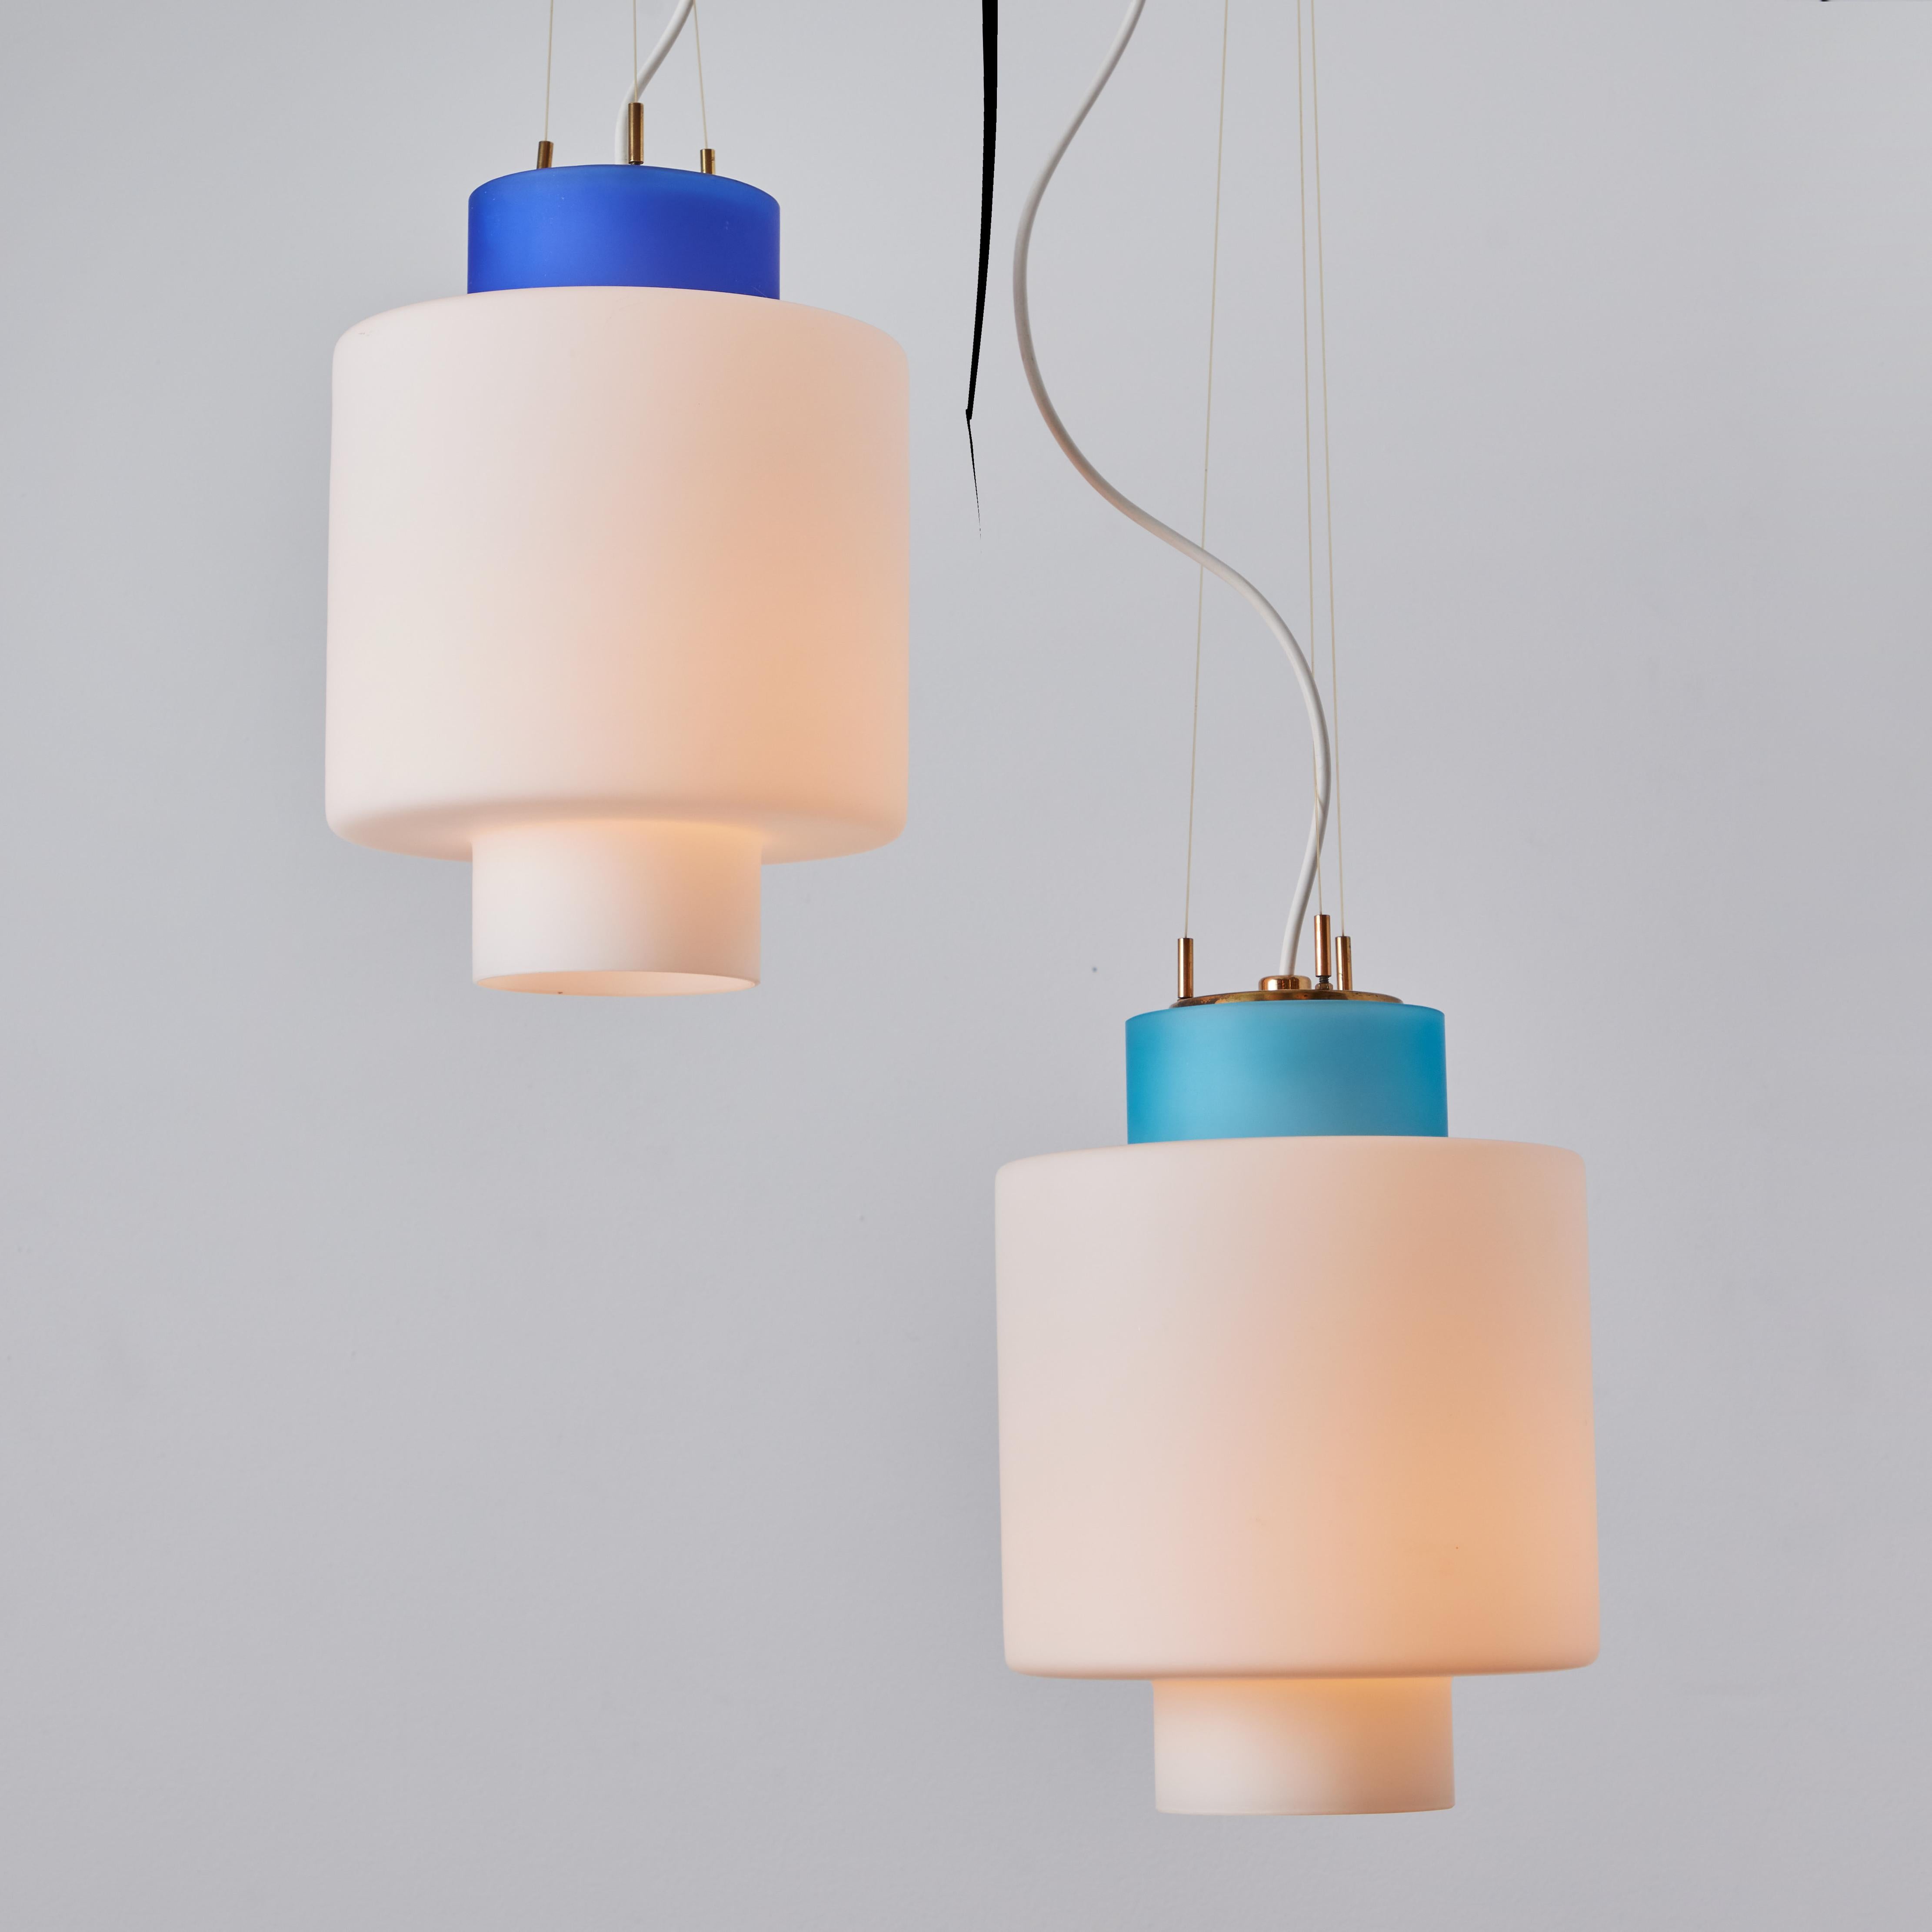 Italian 1950s Stilnovo Two-Pendant Blue and White Opaline Glass Suspension Lamp For Sale